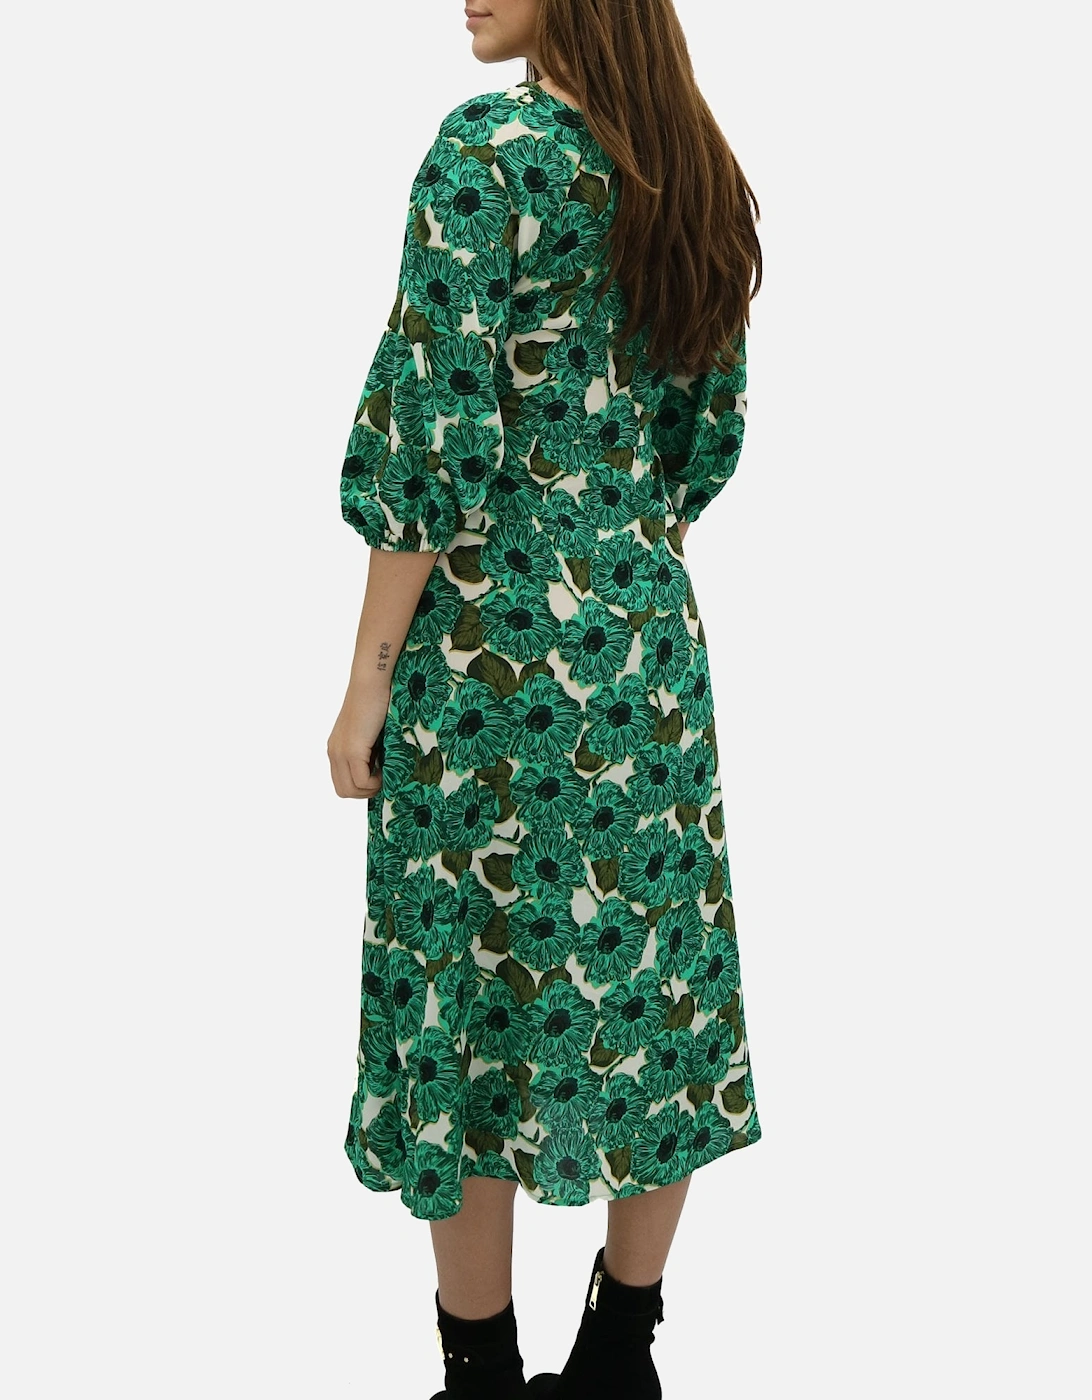 Poppy Print Green Midi Dress